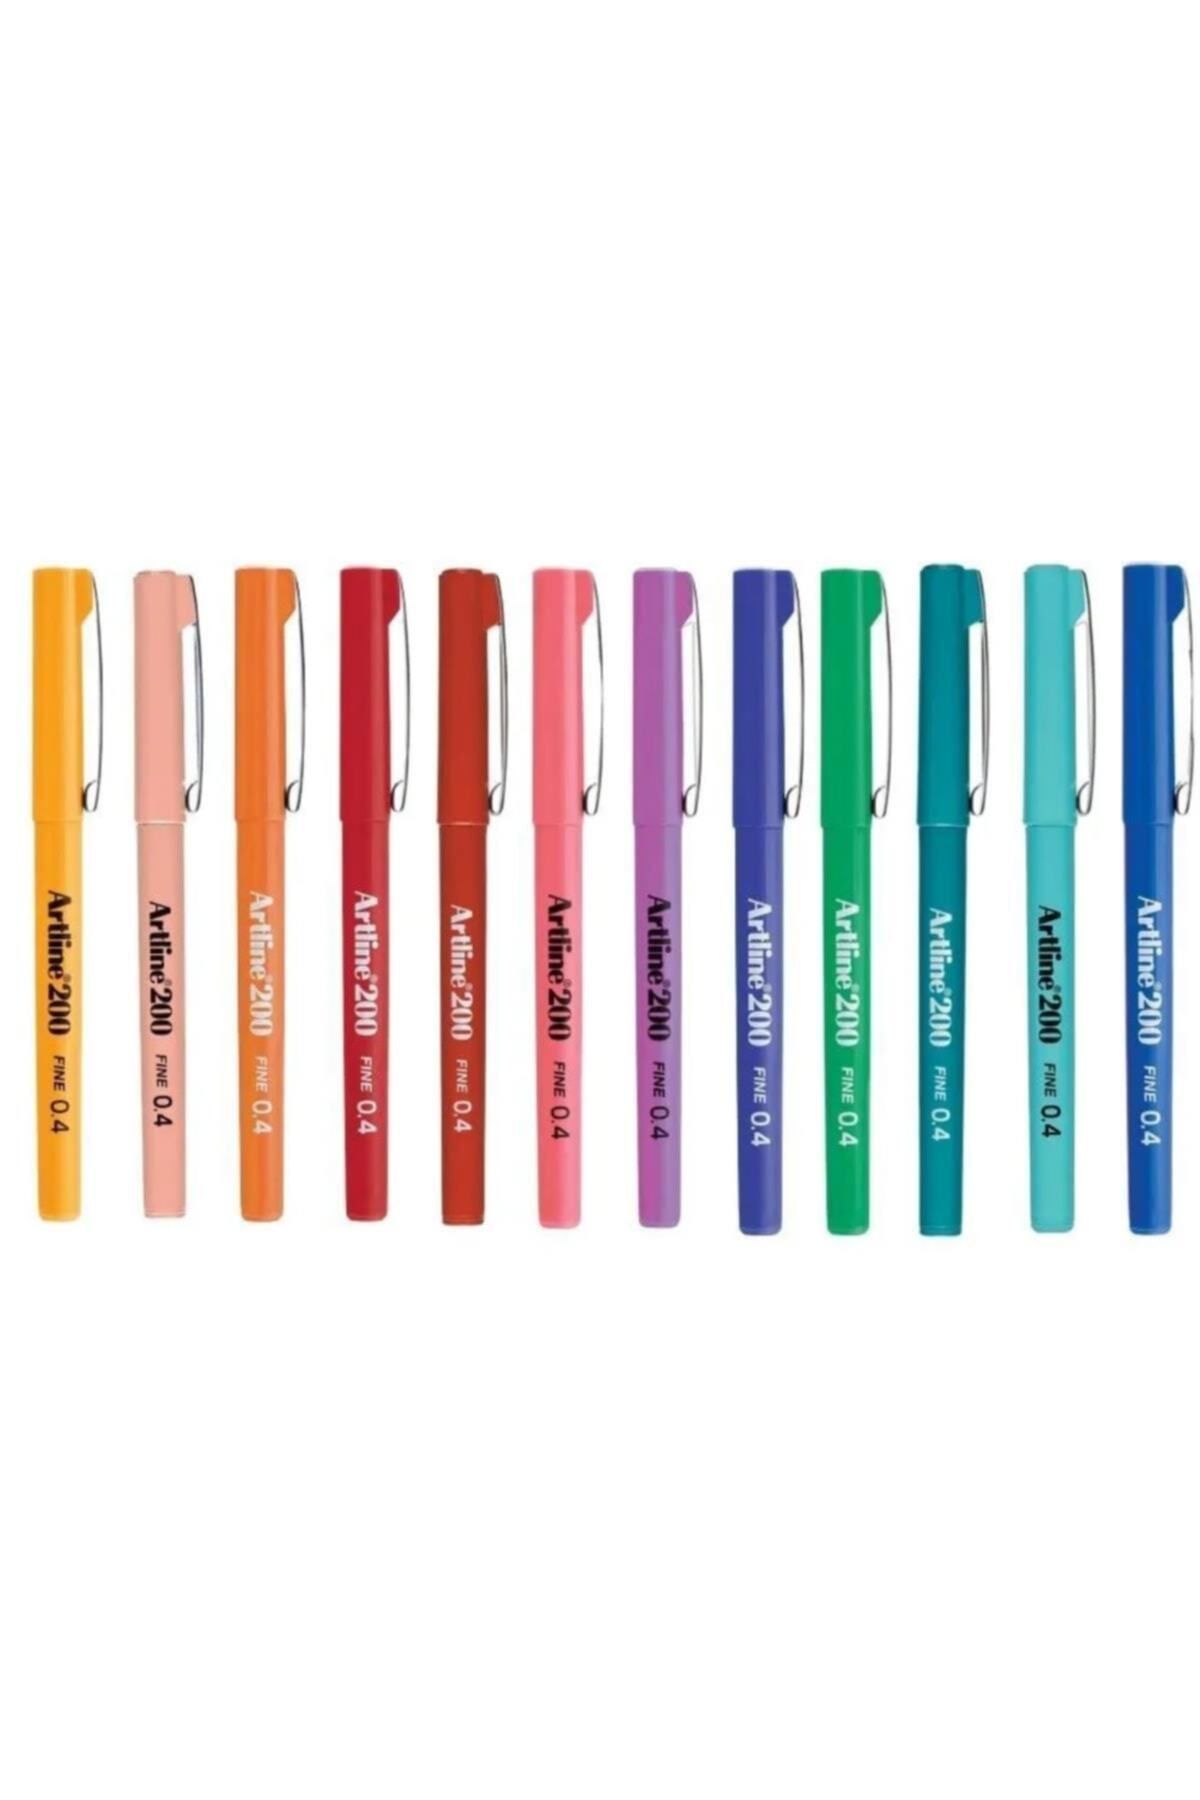 artline 200 Fineliner 0.4 Mm Ince Uçlu Yazı Ve Çizim Kalemi 12 Renk (12 ADET KALEM)